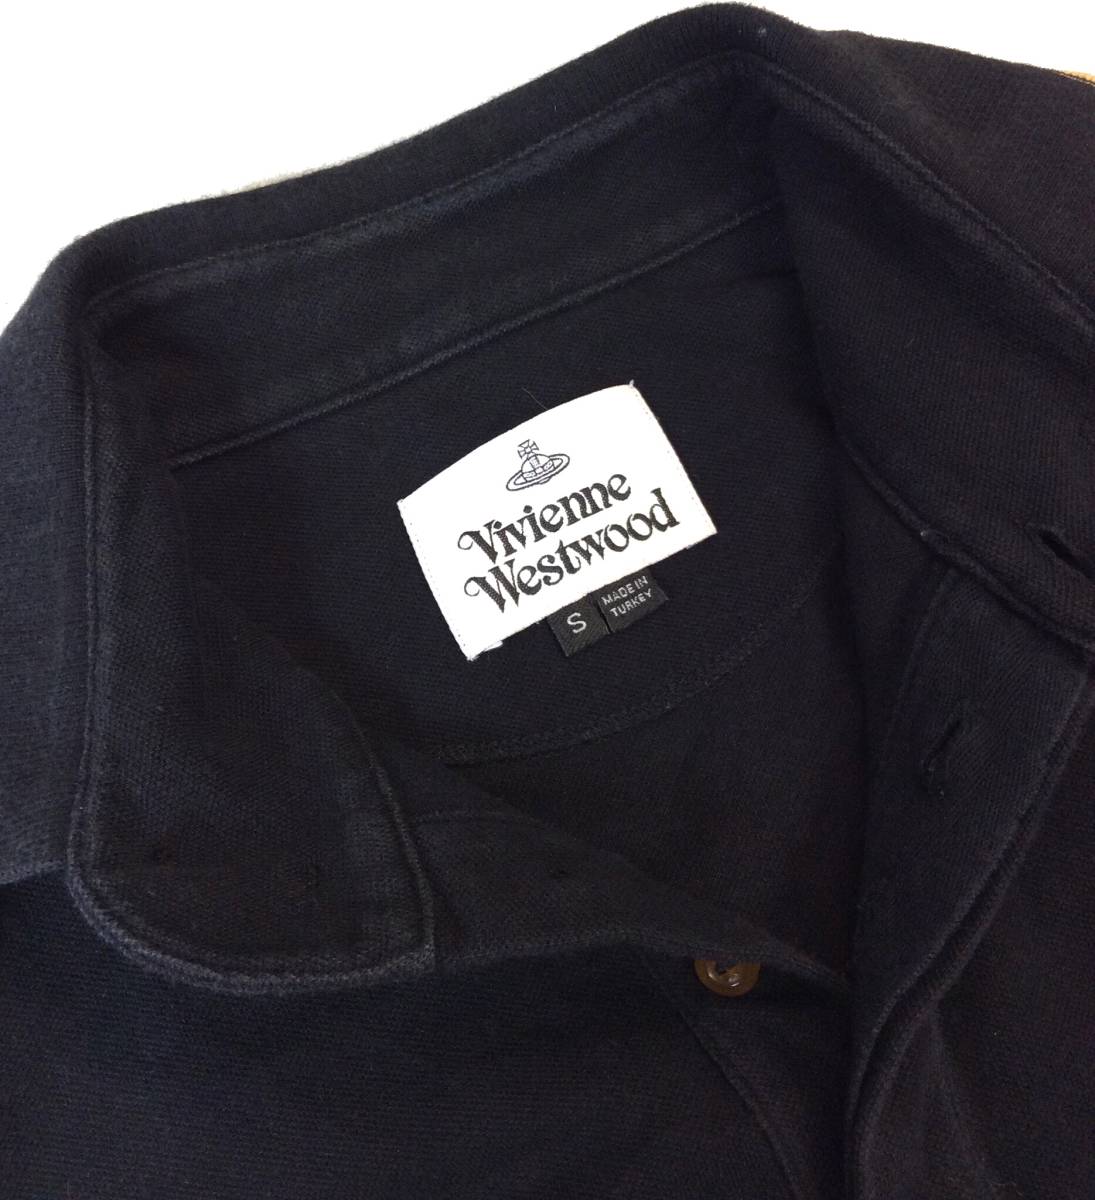 Vivienne Westwood ヴィヴィアンウエストウッド オーブ刺繍 半袖 ポロシャツ ブラック 黒/イエロー メンズ S (ma)_画像4